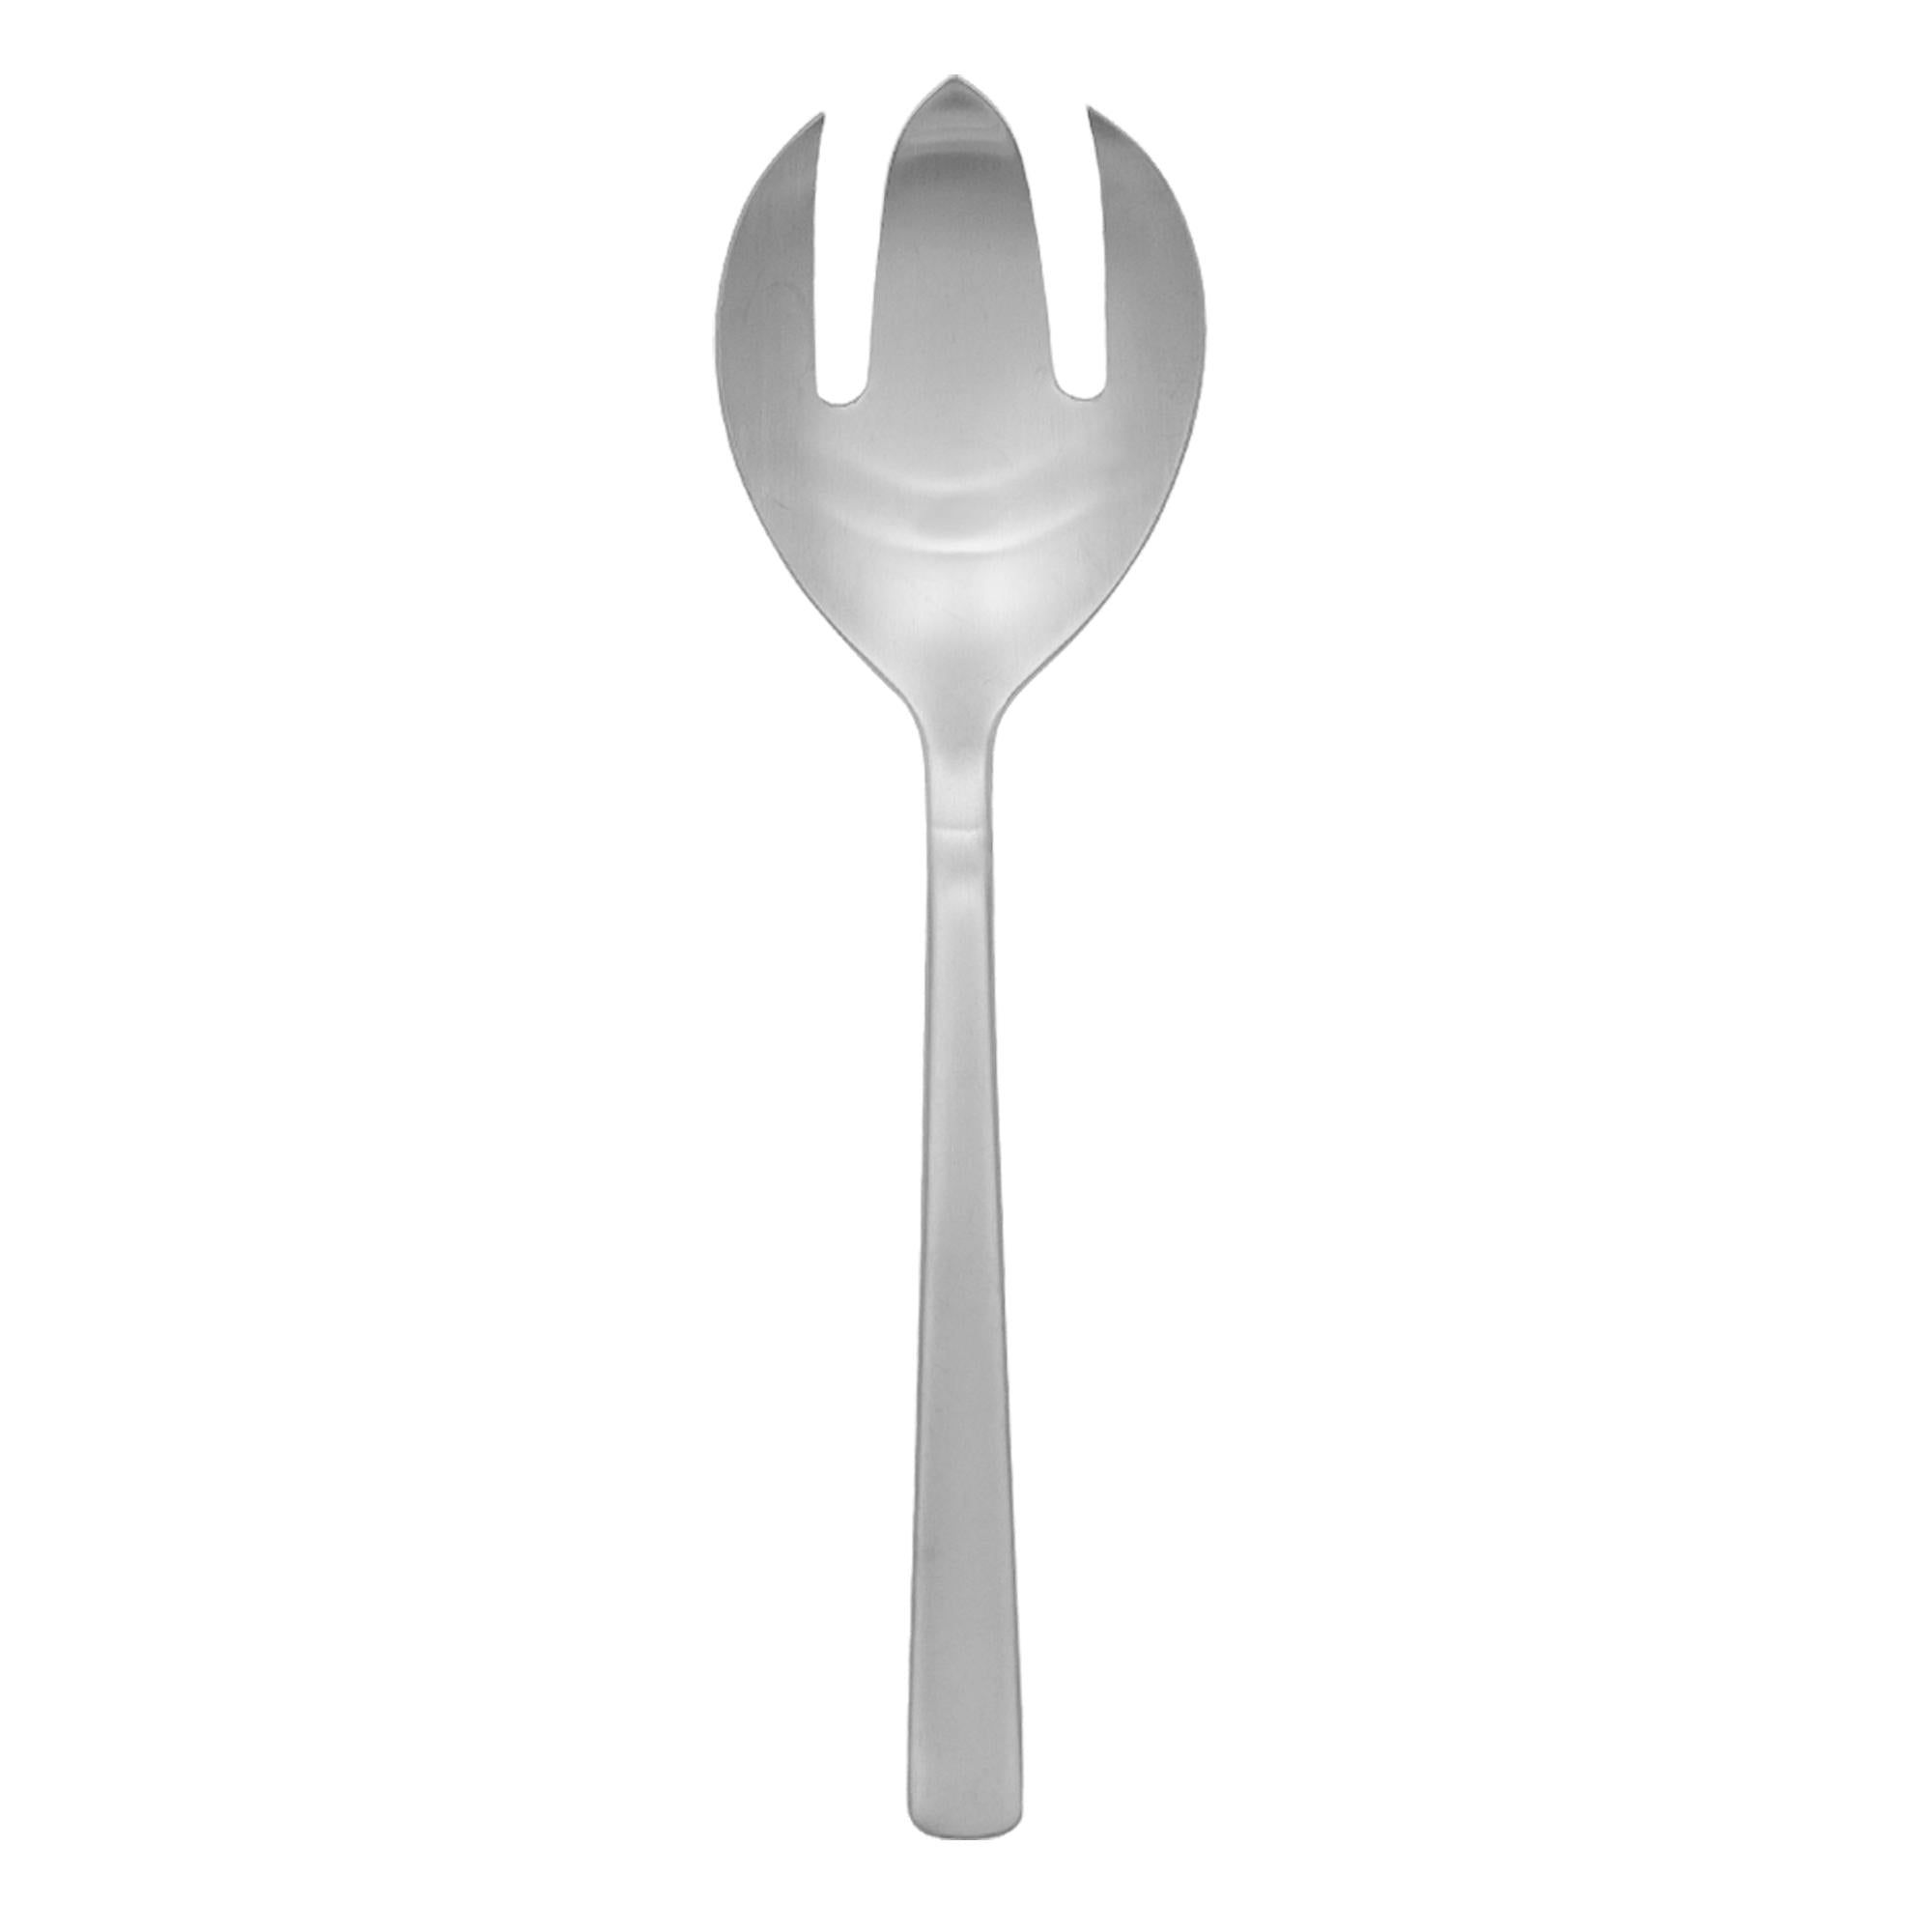 Kay Bojesen Grand Prix servering gaffel, mat stål